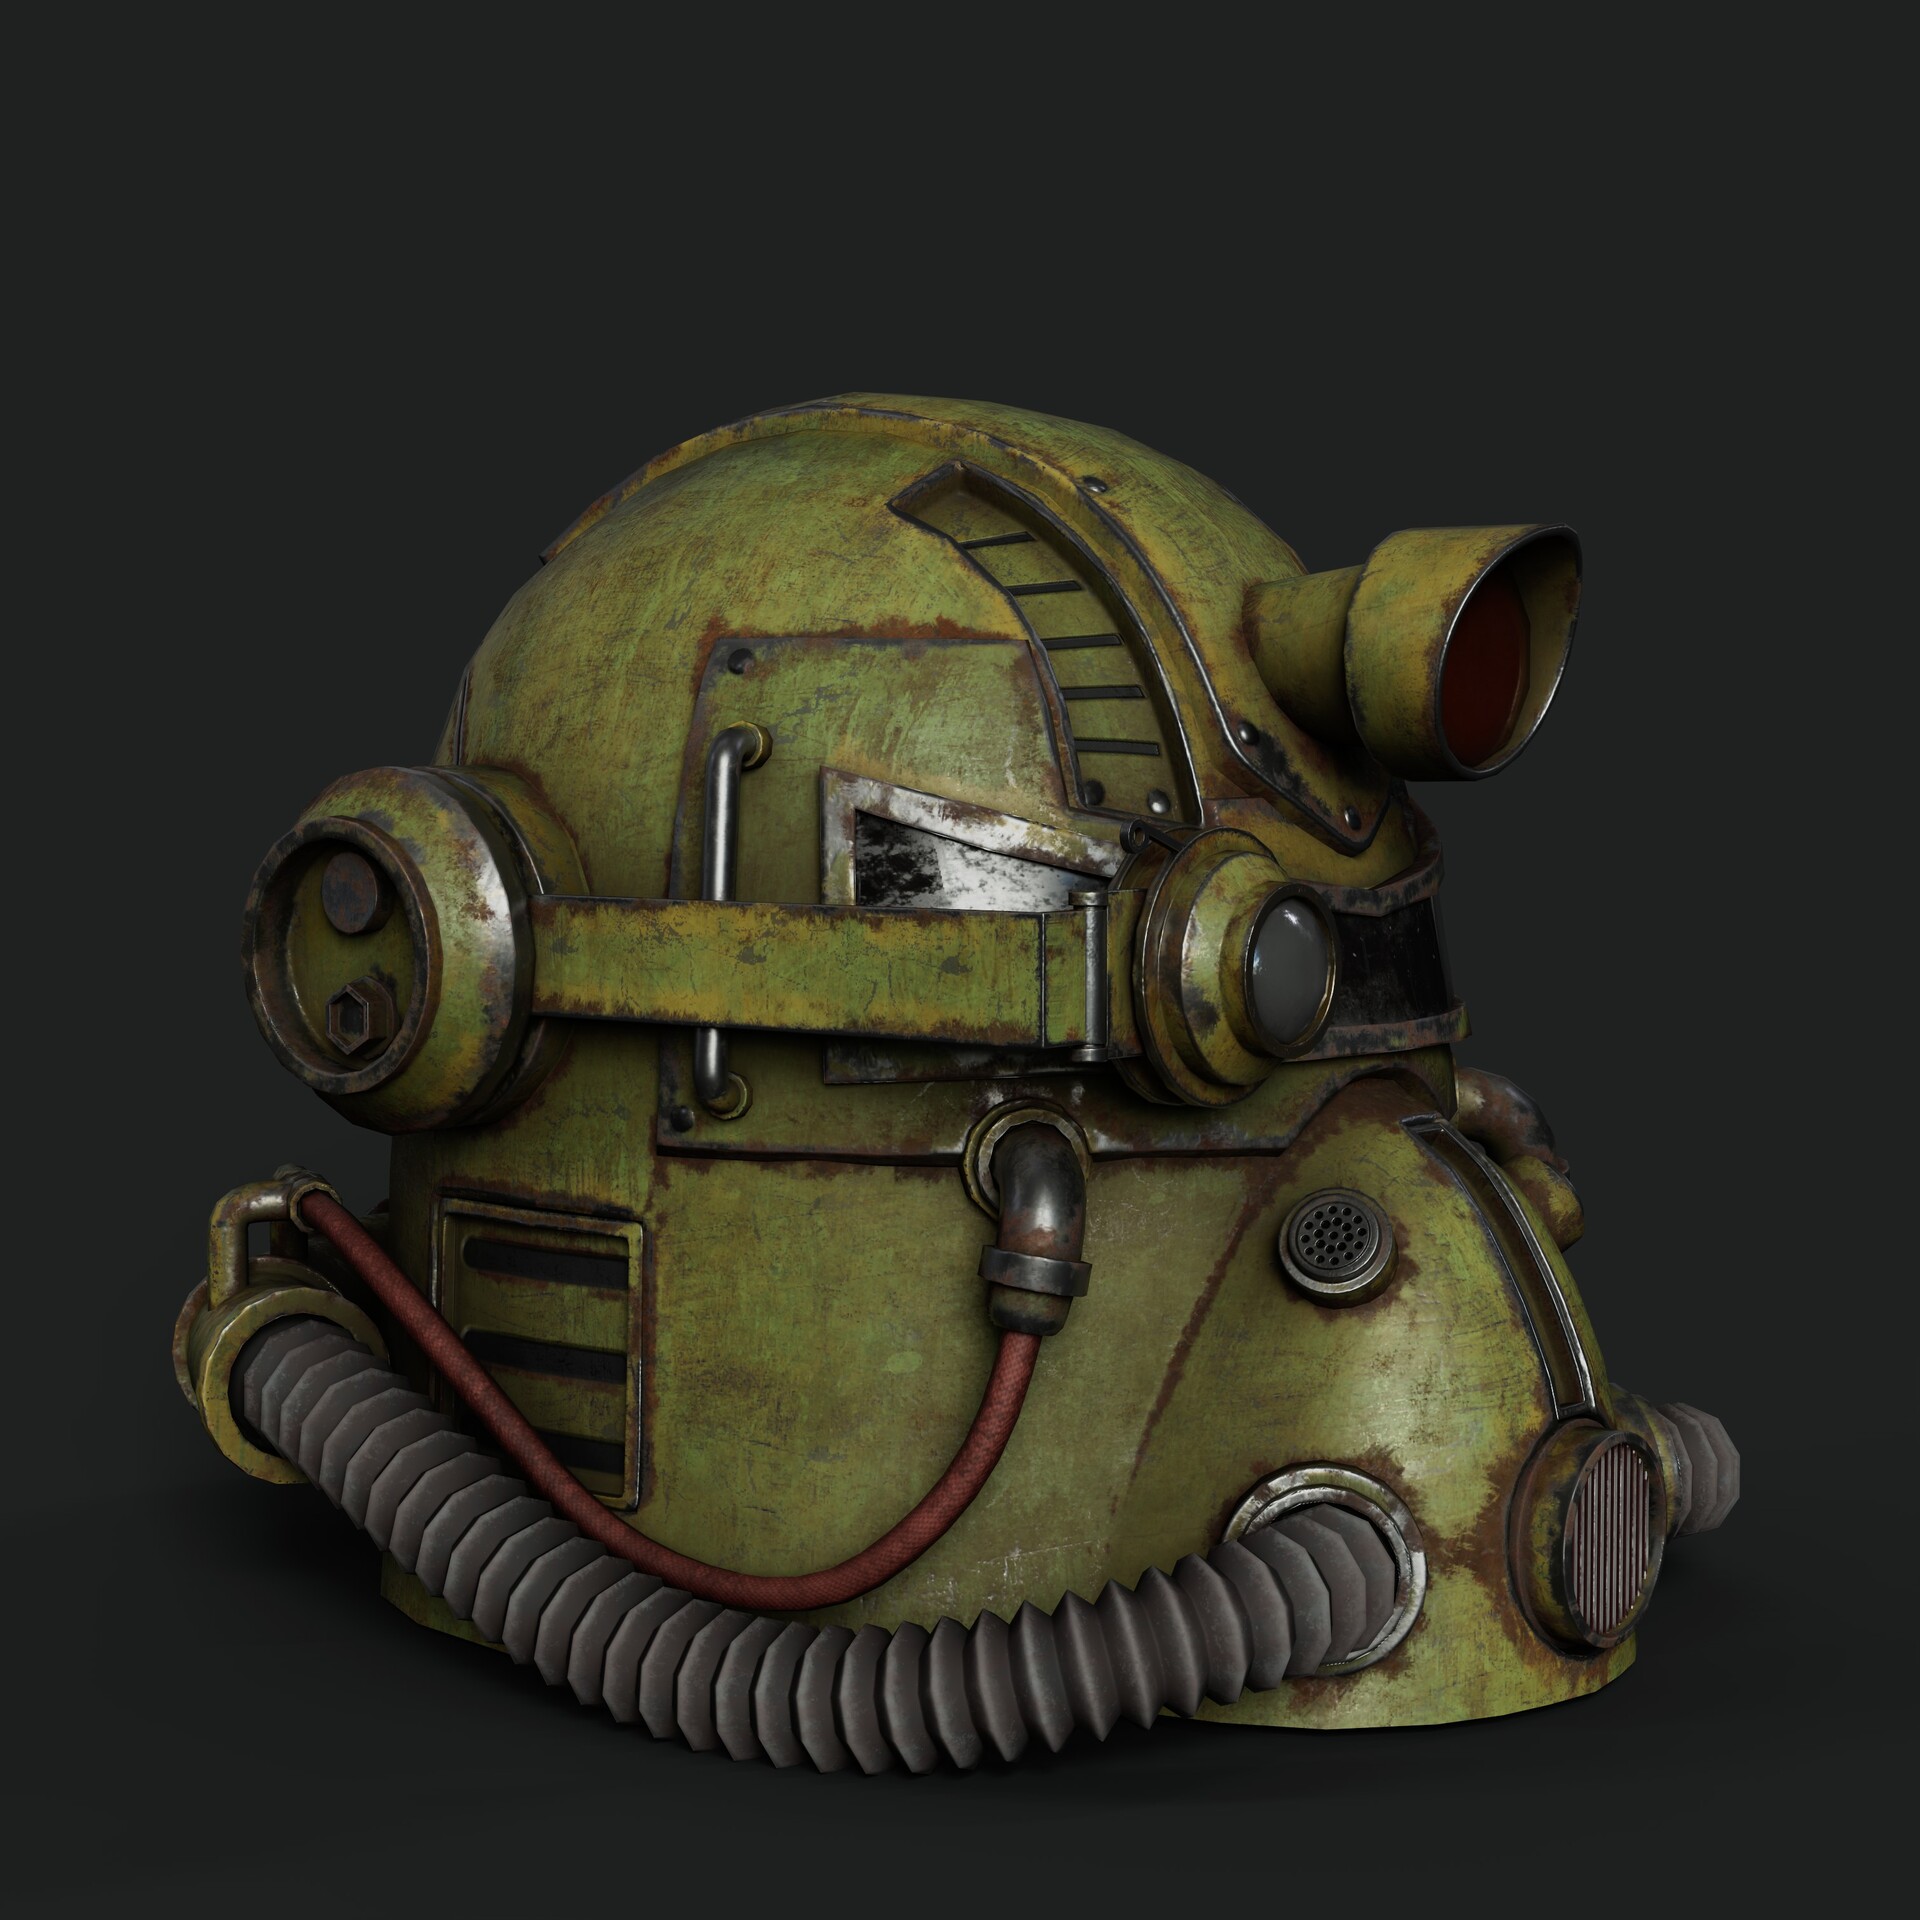 ArtStation - Game asset Fallout Helmet